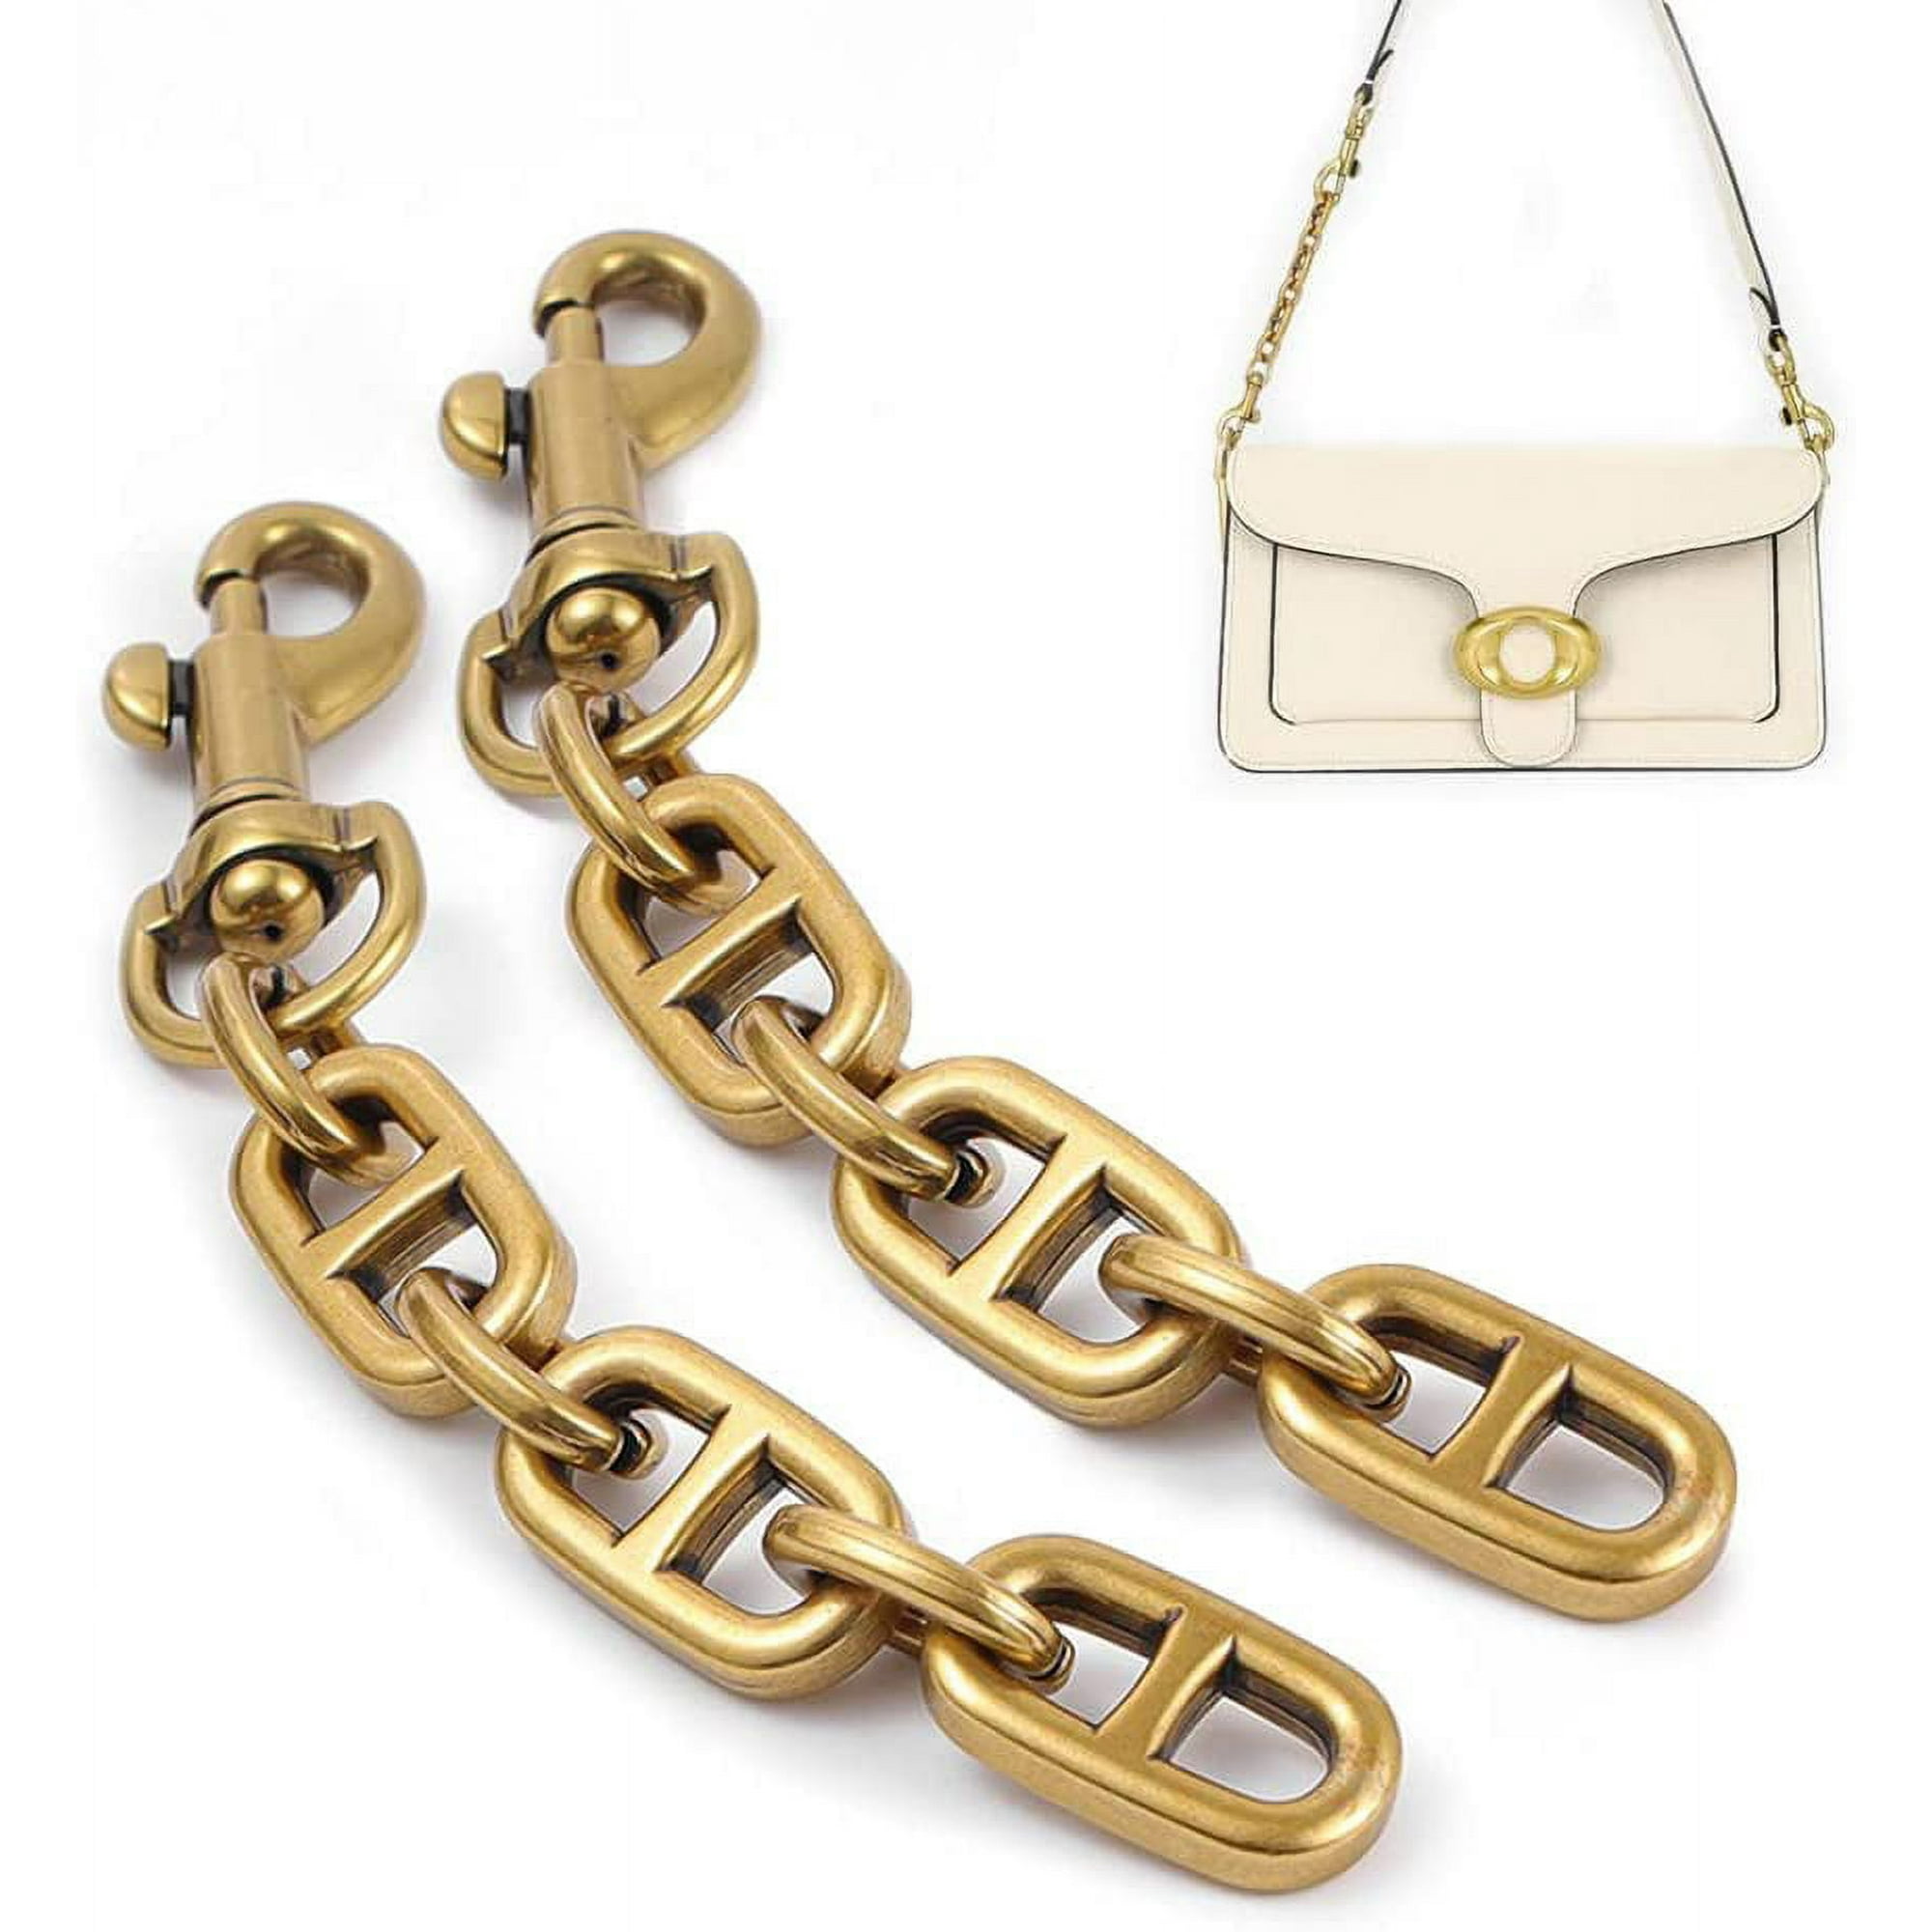 lv gold purse